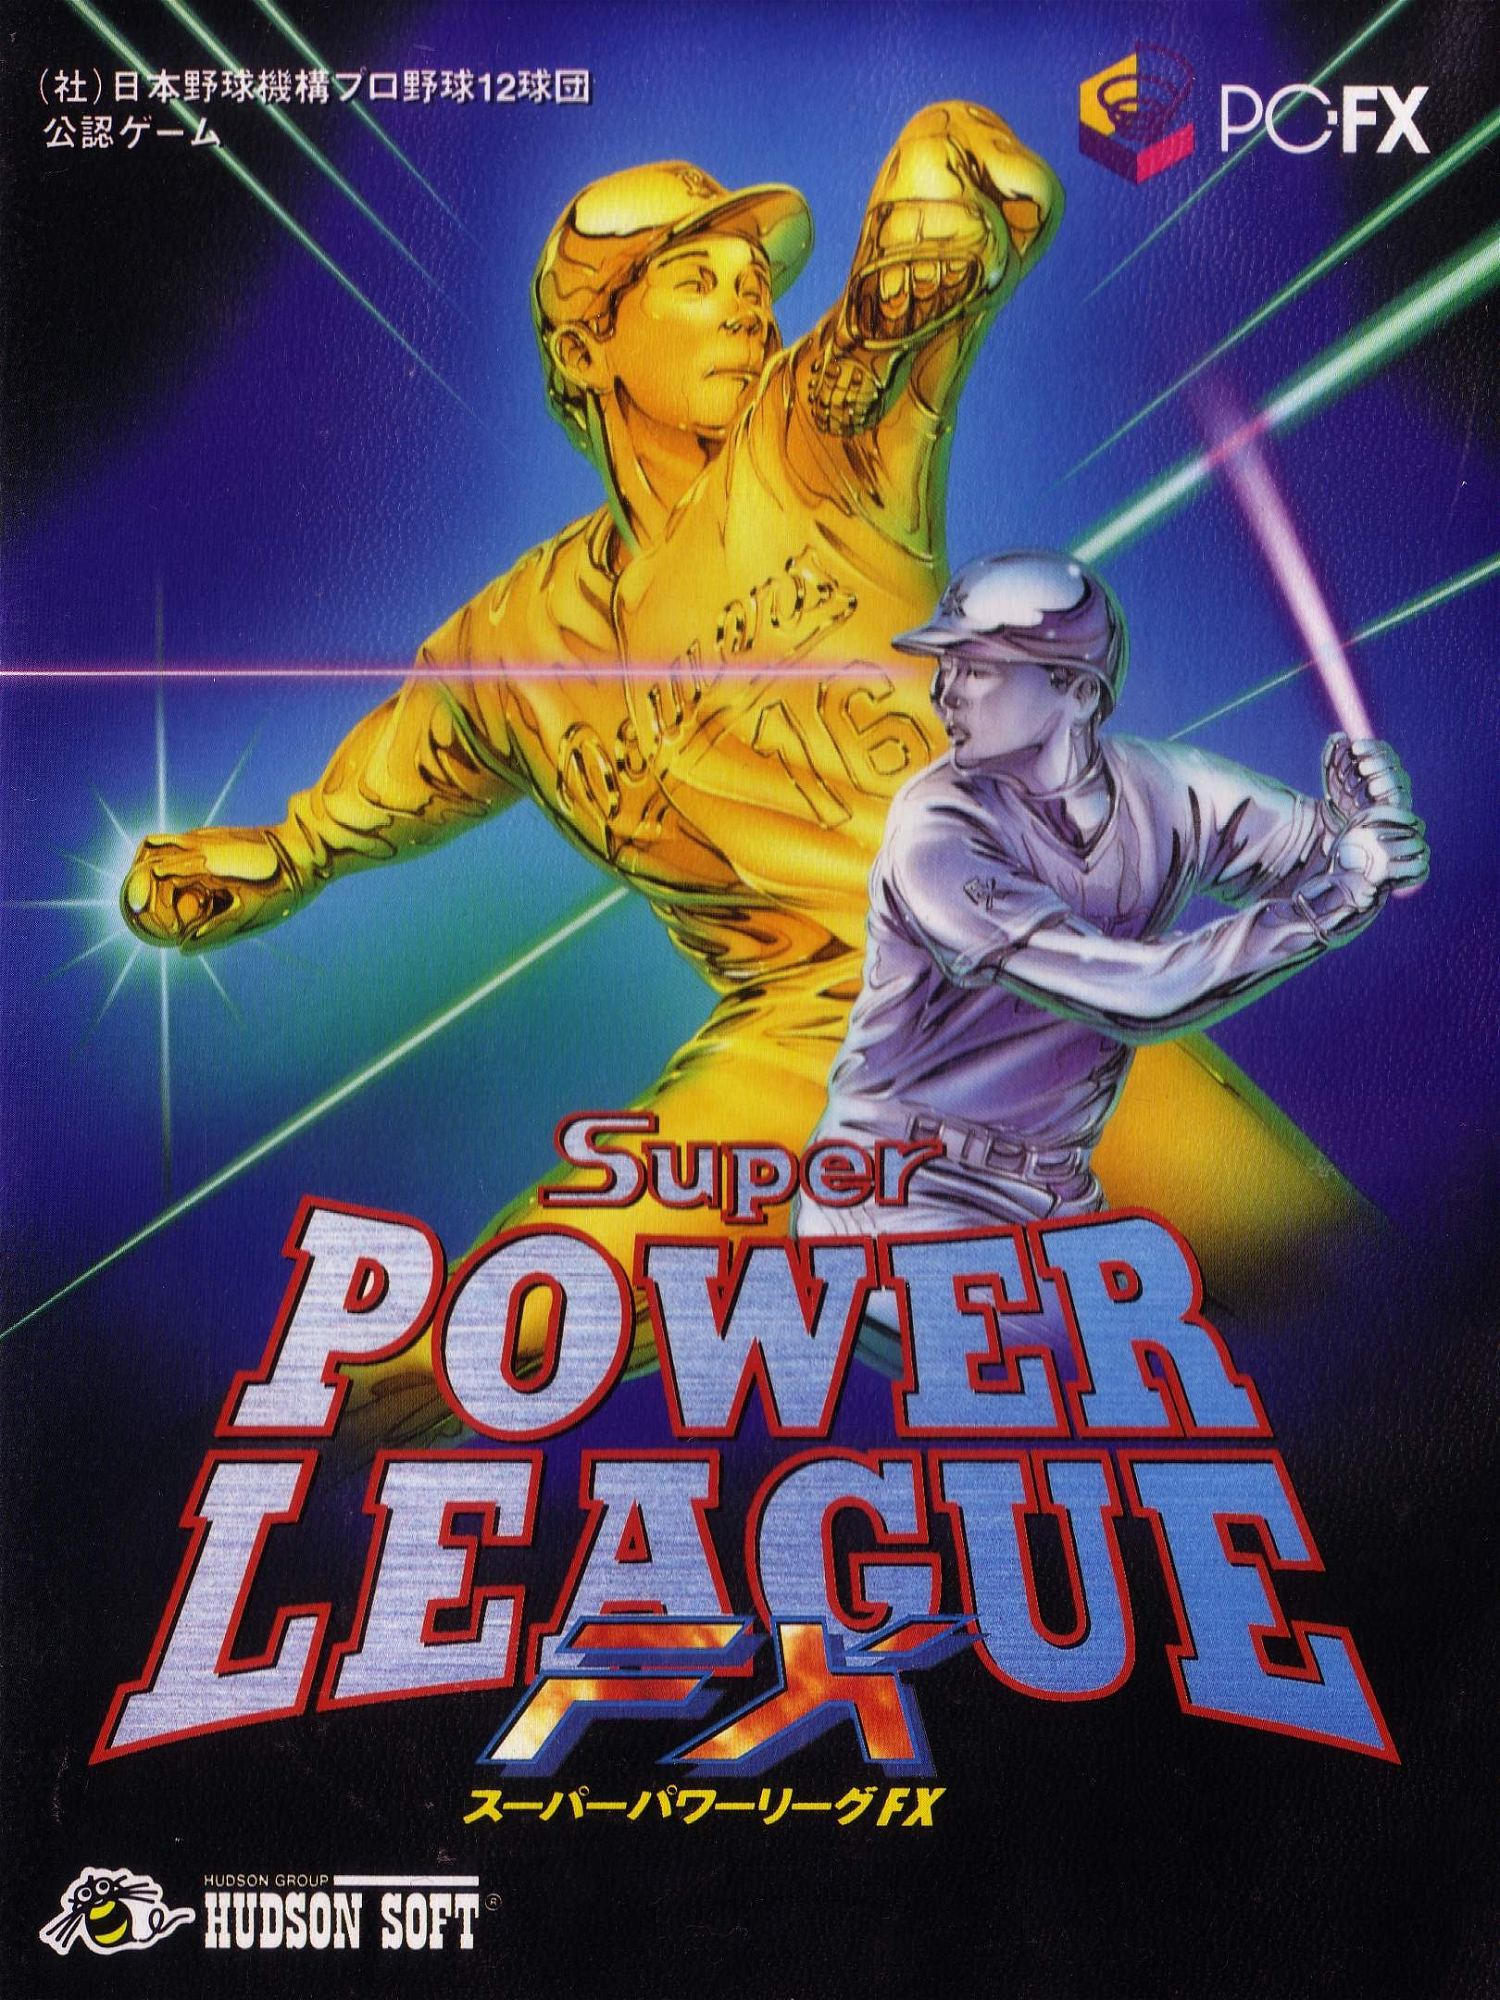 Супер пауэр. Super Power. PC-FX (PCFX) games. Super powerful. Super Power PC game Club.